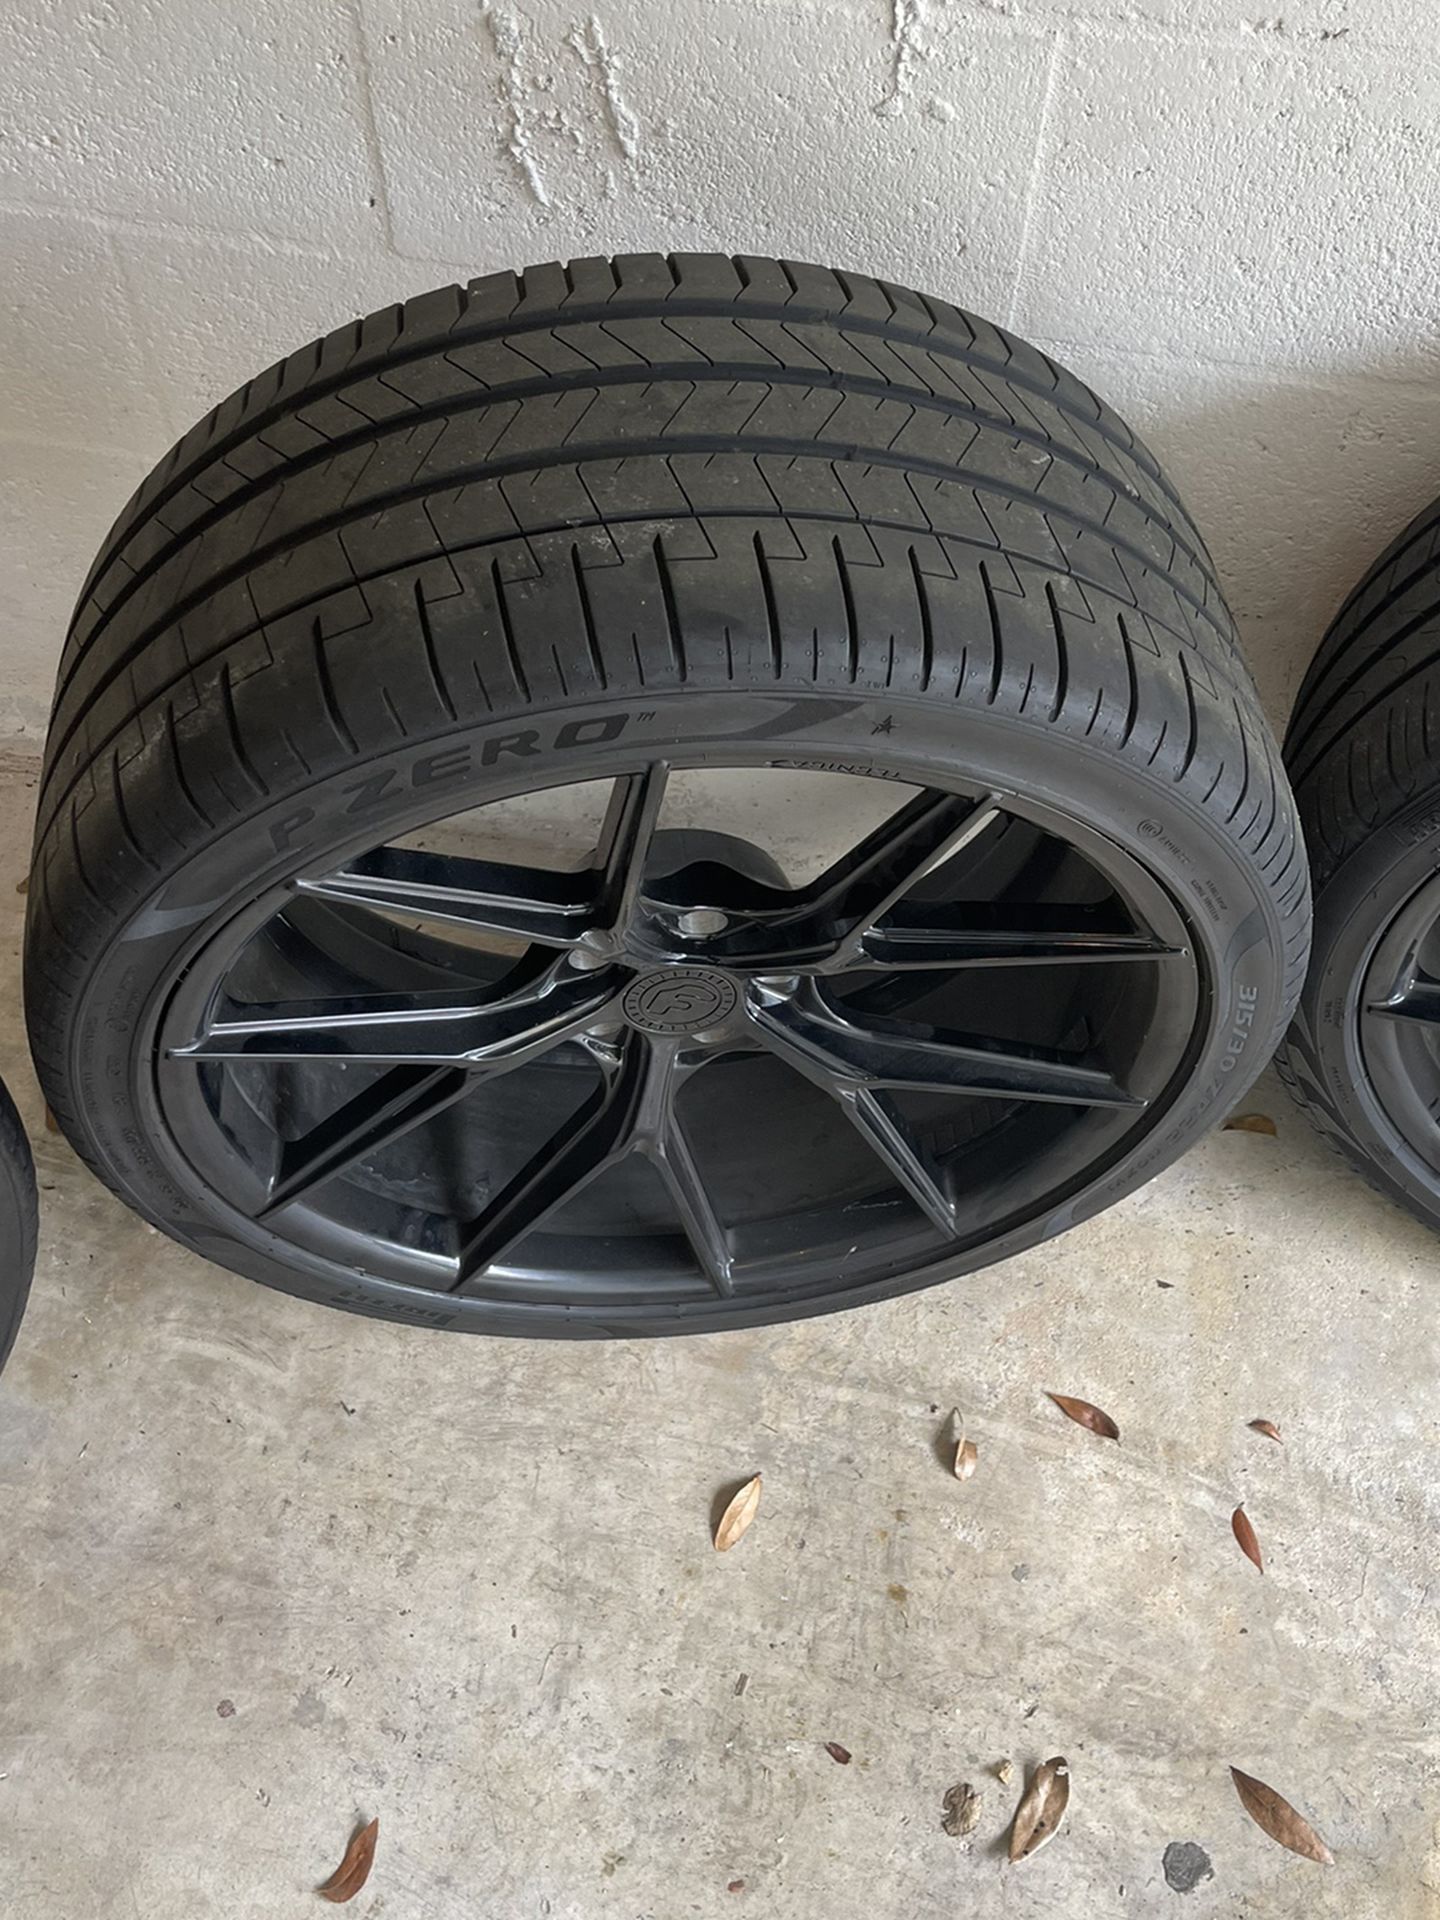 22” Staggered Forgiato Rims With 85% Threading Pirelli Tires